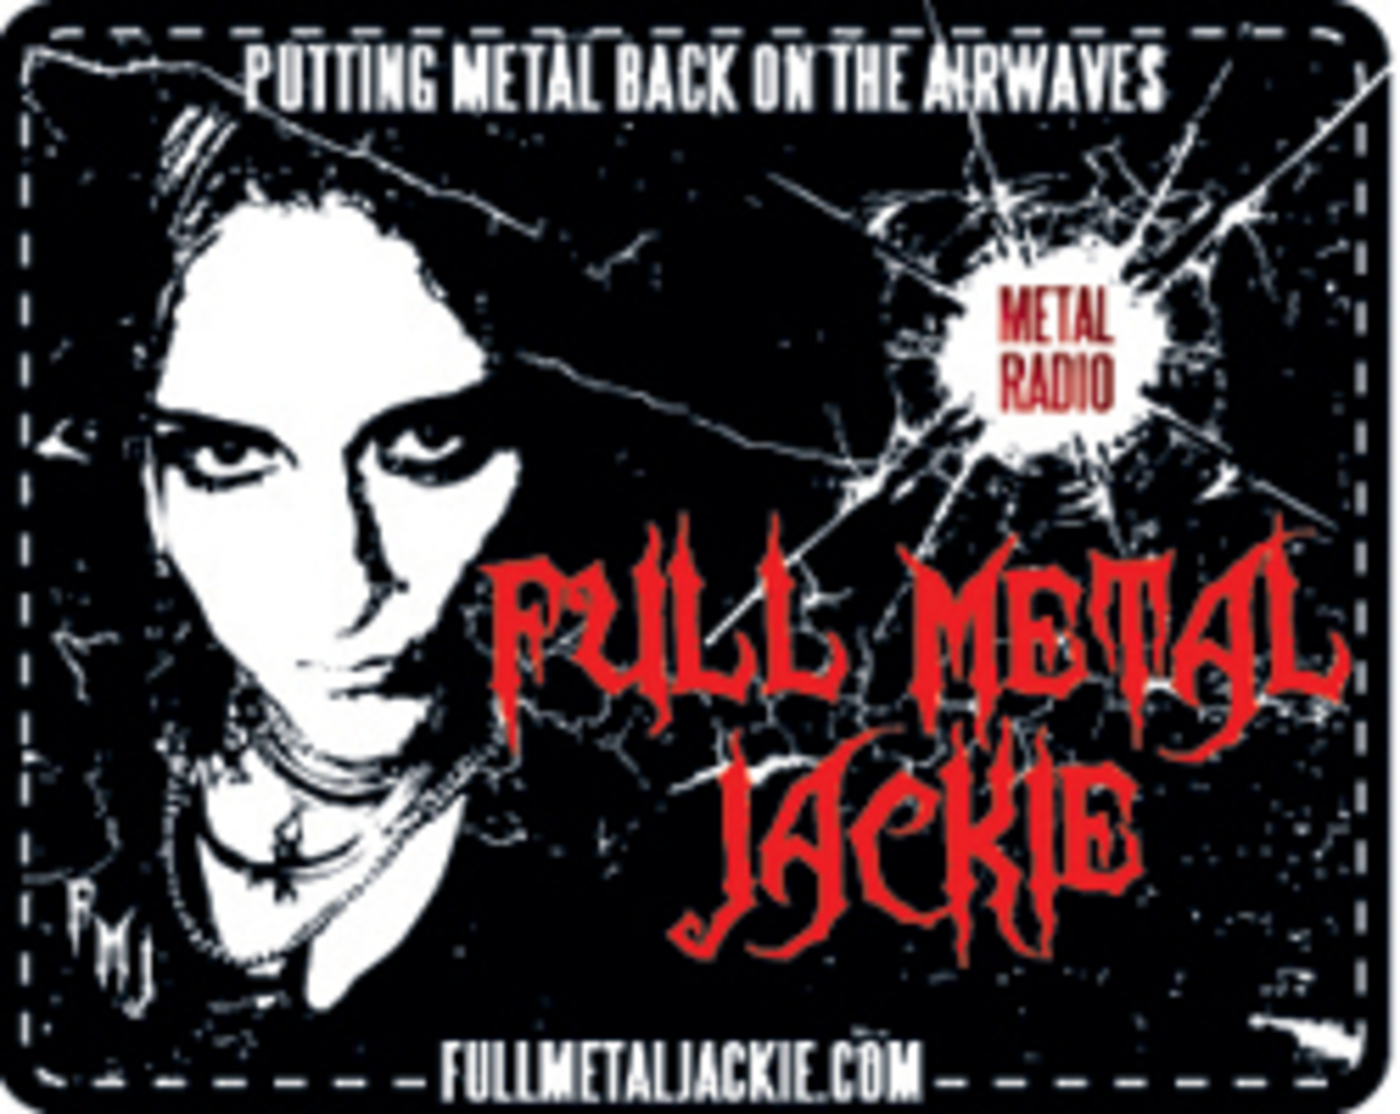 Burton C. Bell of Fear Factory on Full Metal Jackie Radio